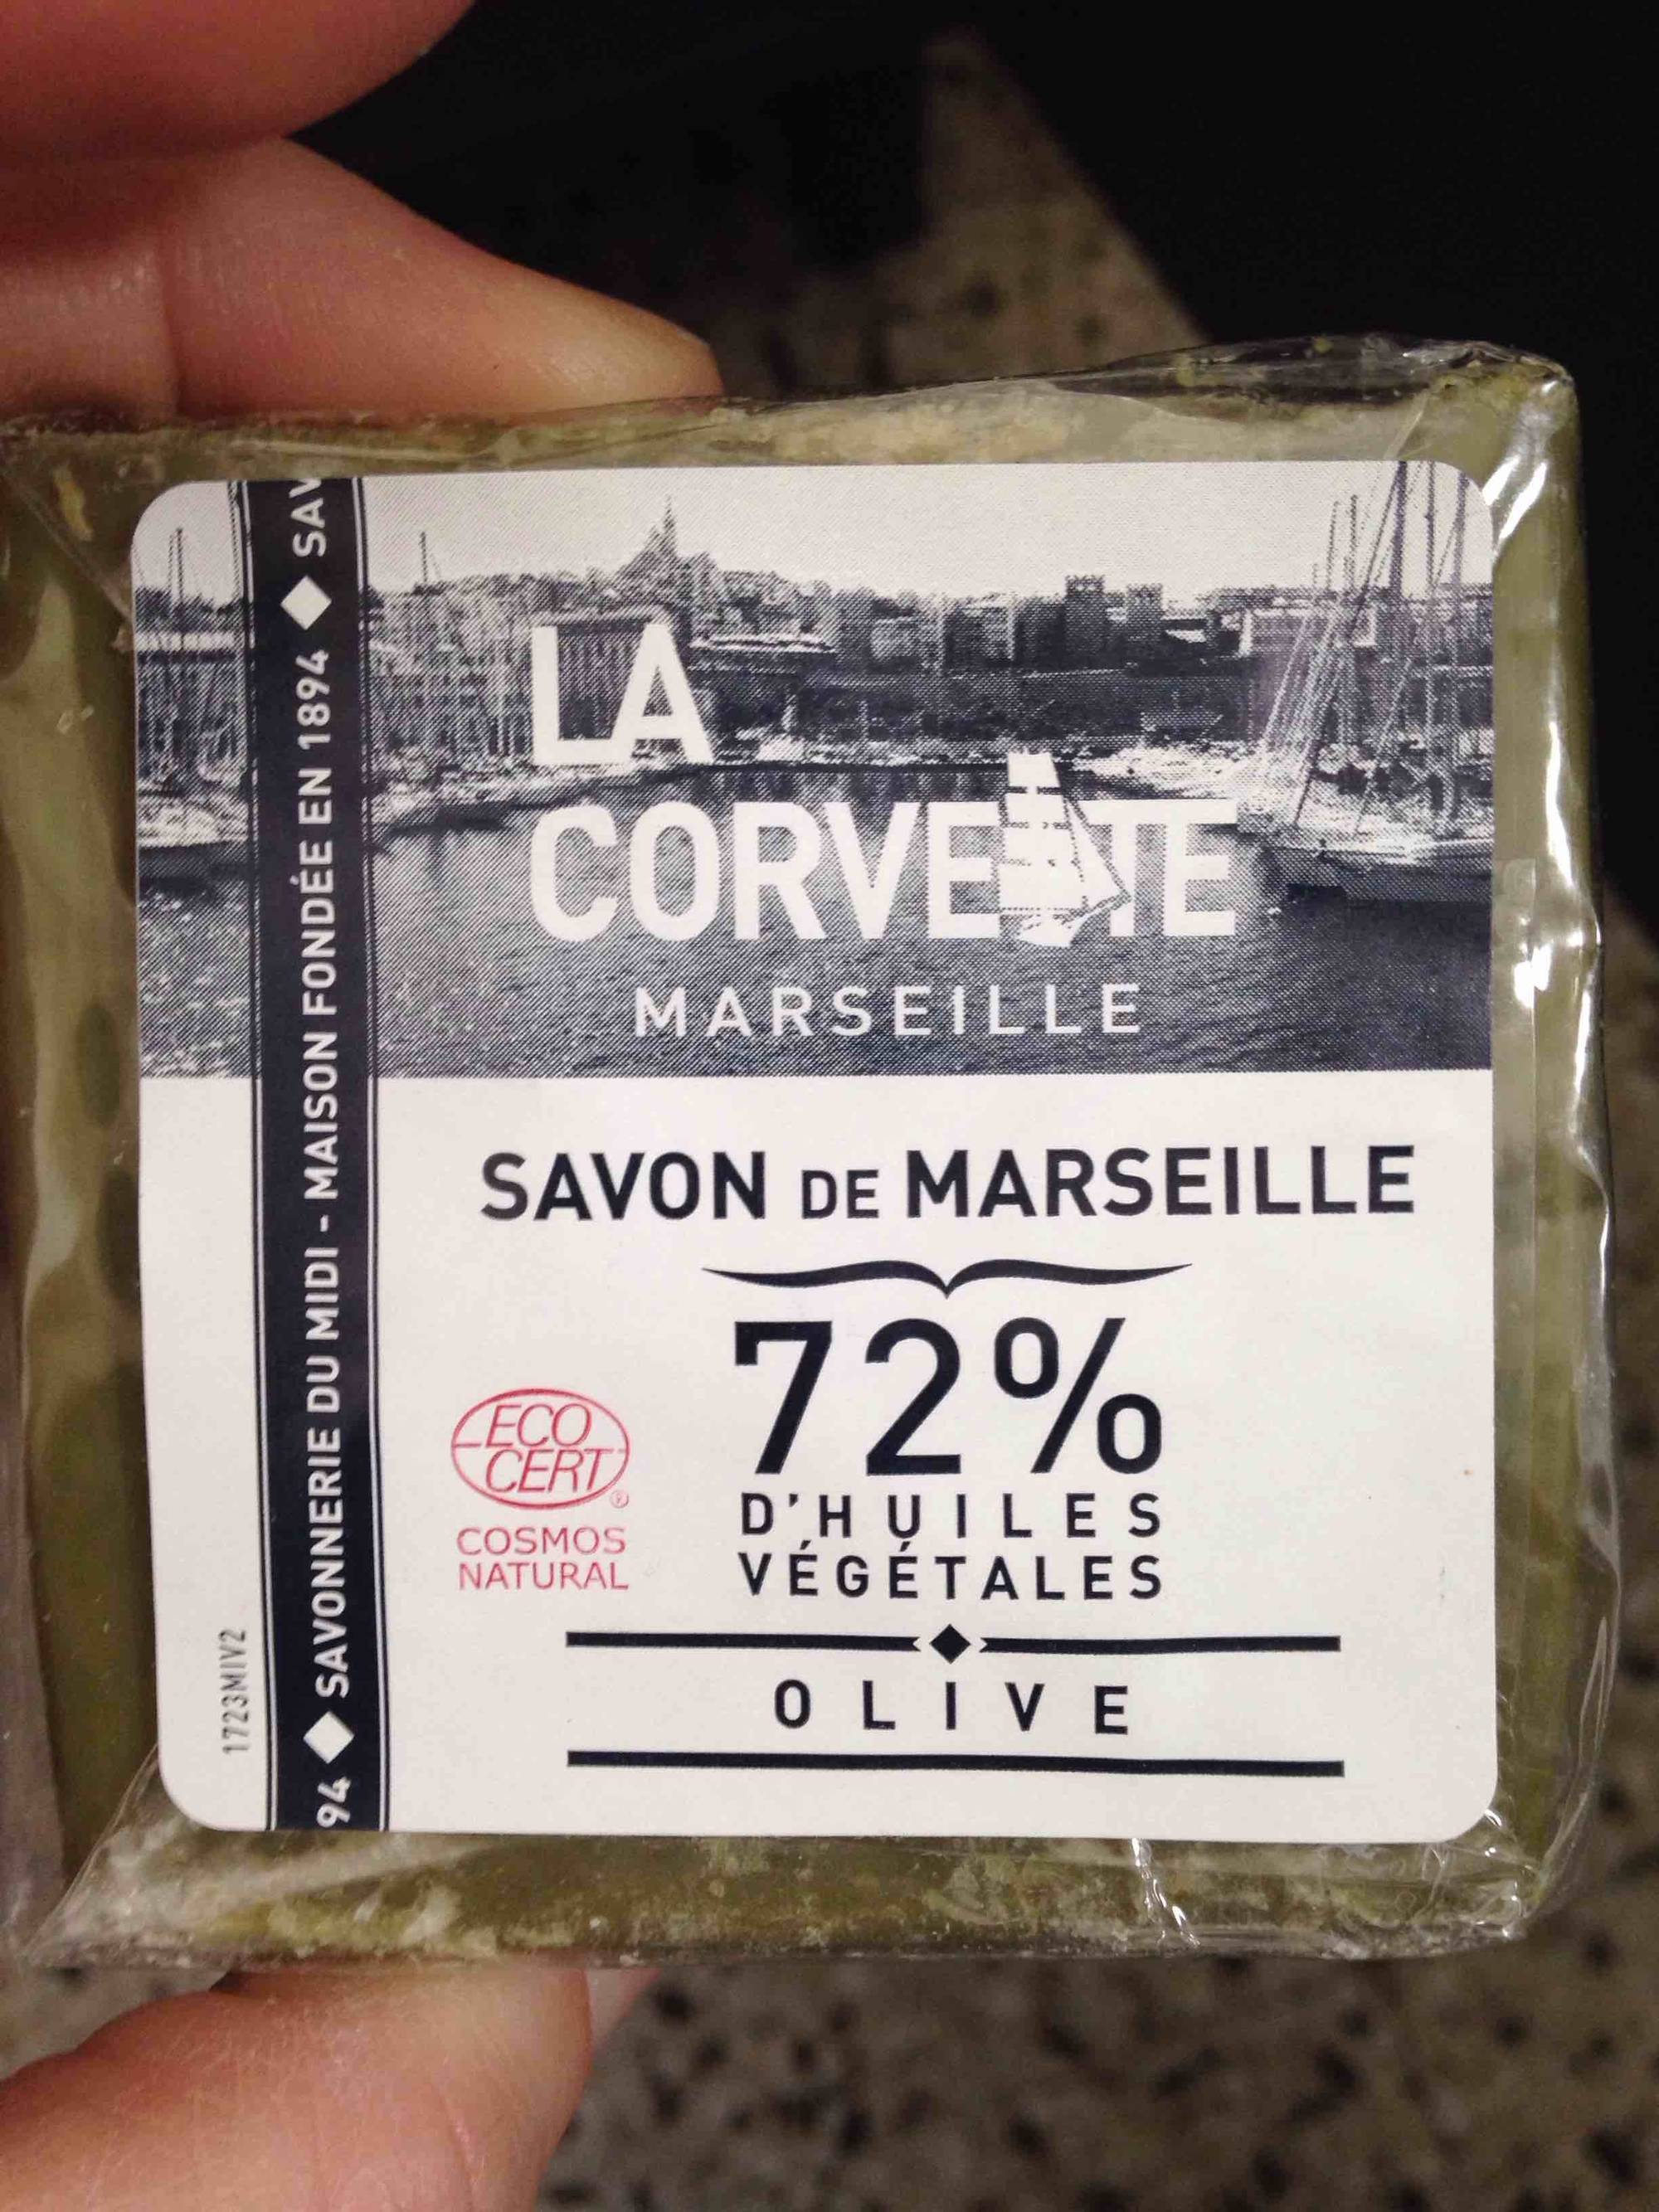 LA CORVETTE MARSEILLE - Savon de Marseille olive